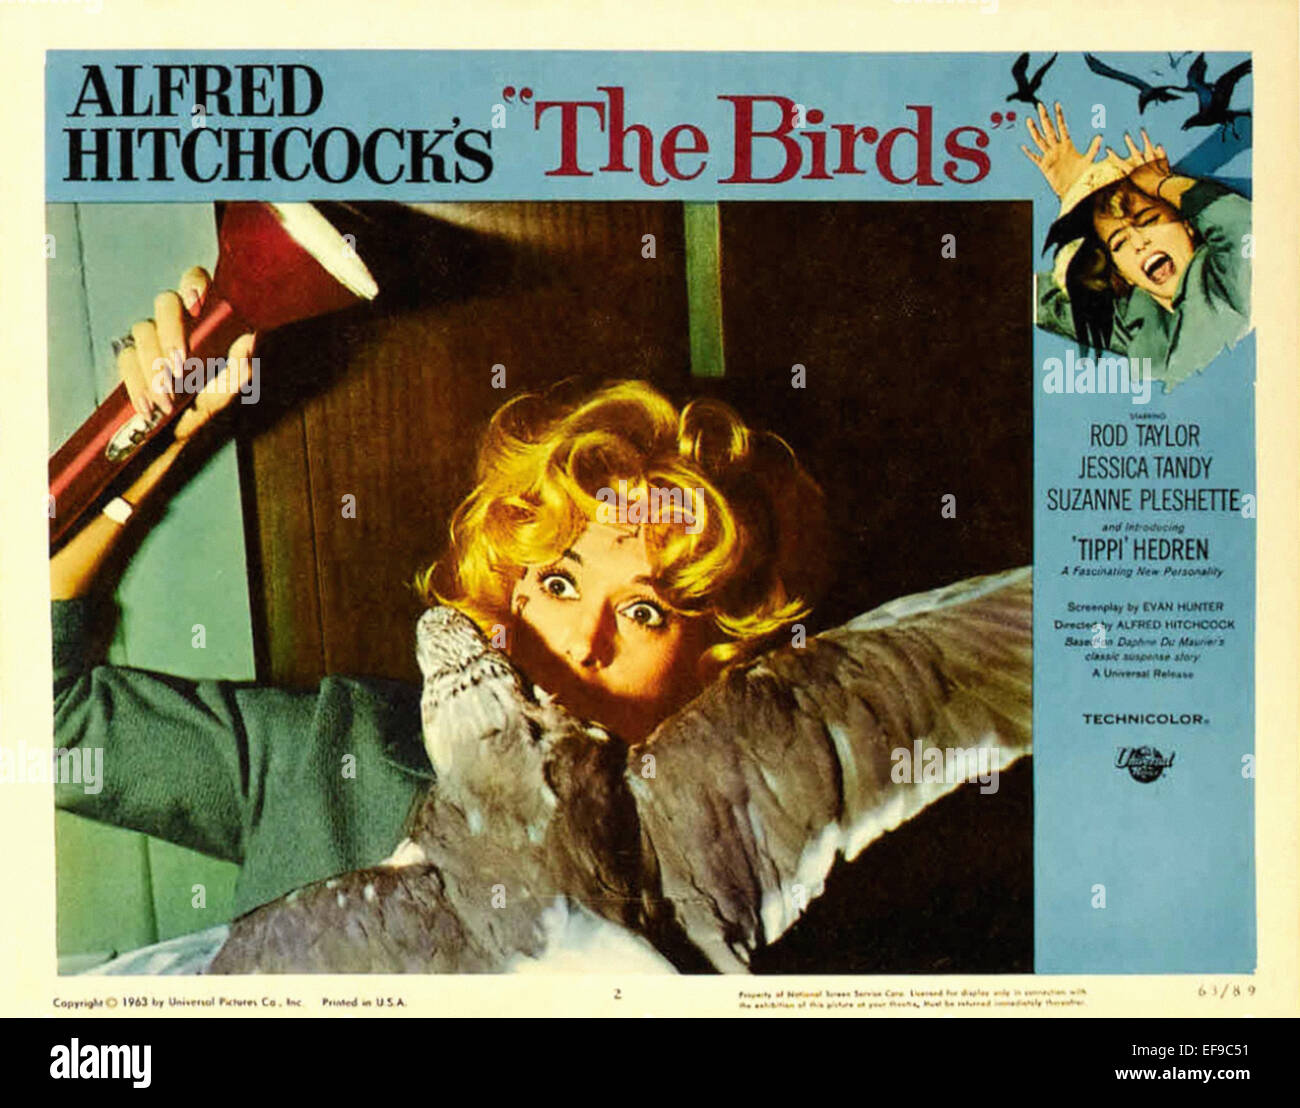 The Birds - Movie Poster - Lobby Card Stock Photo